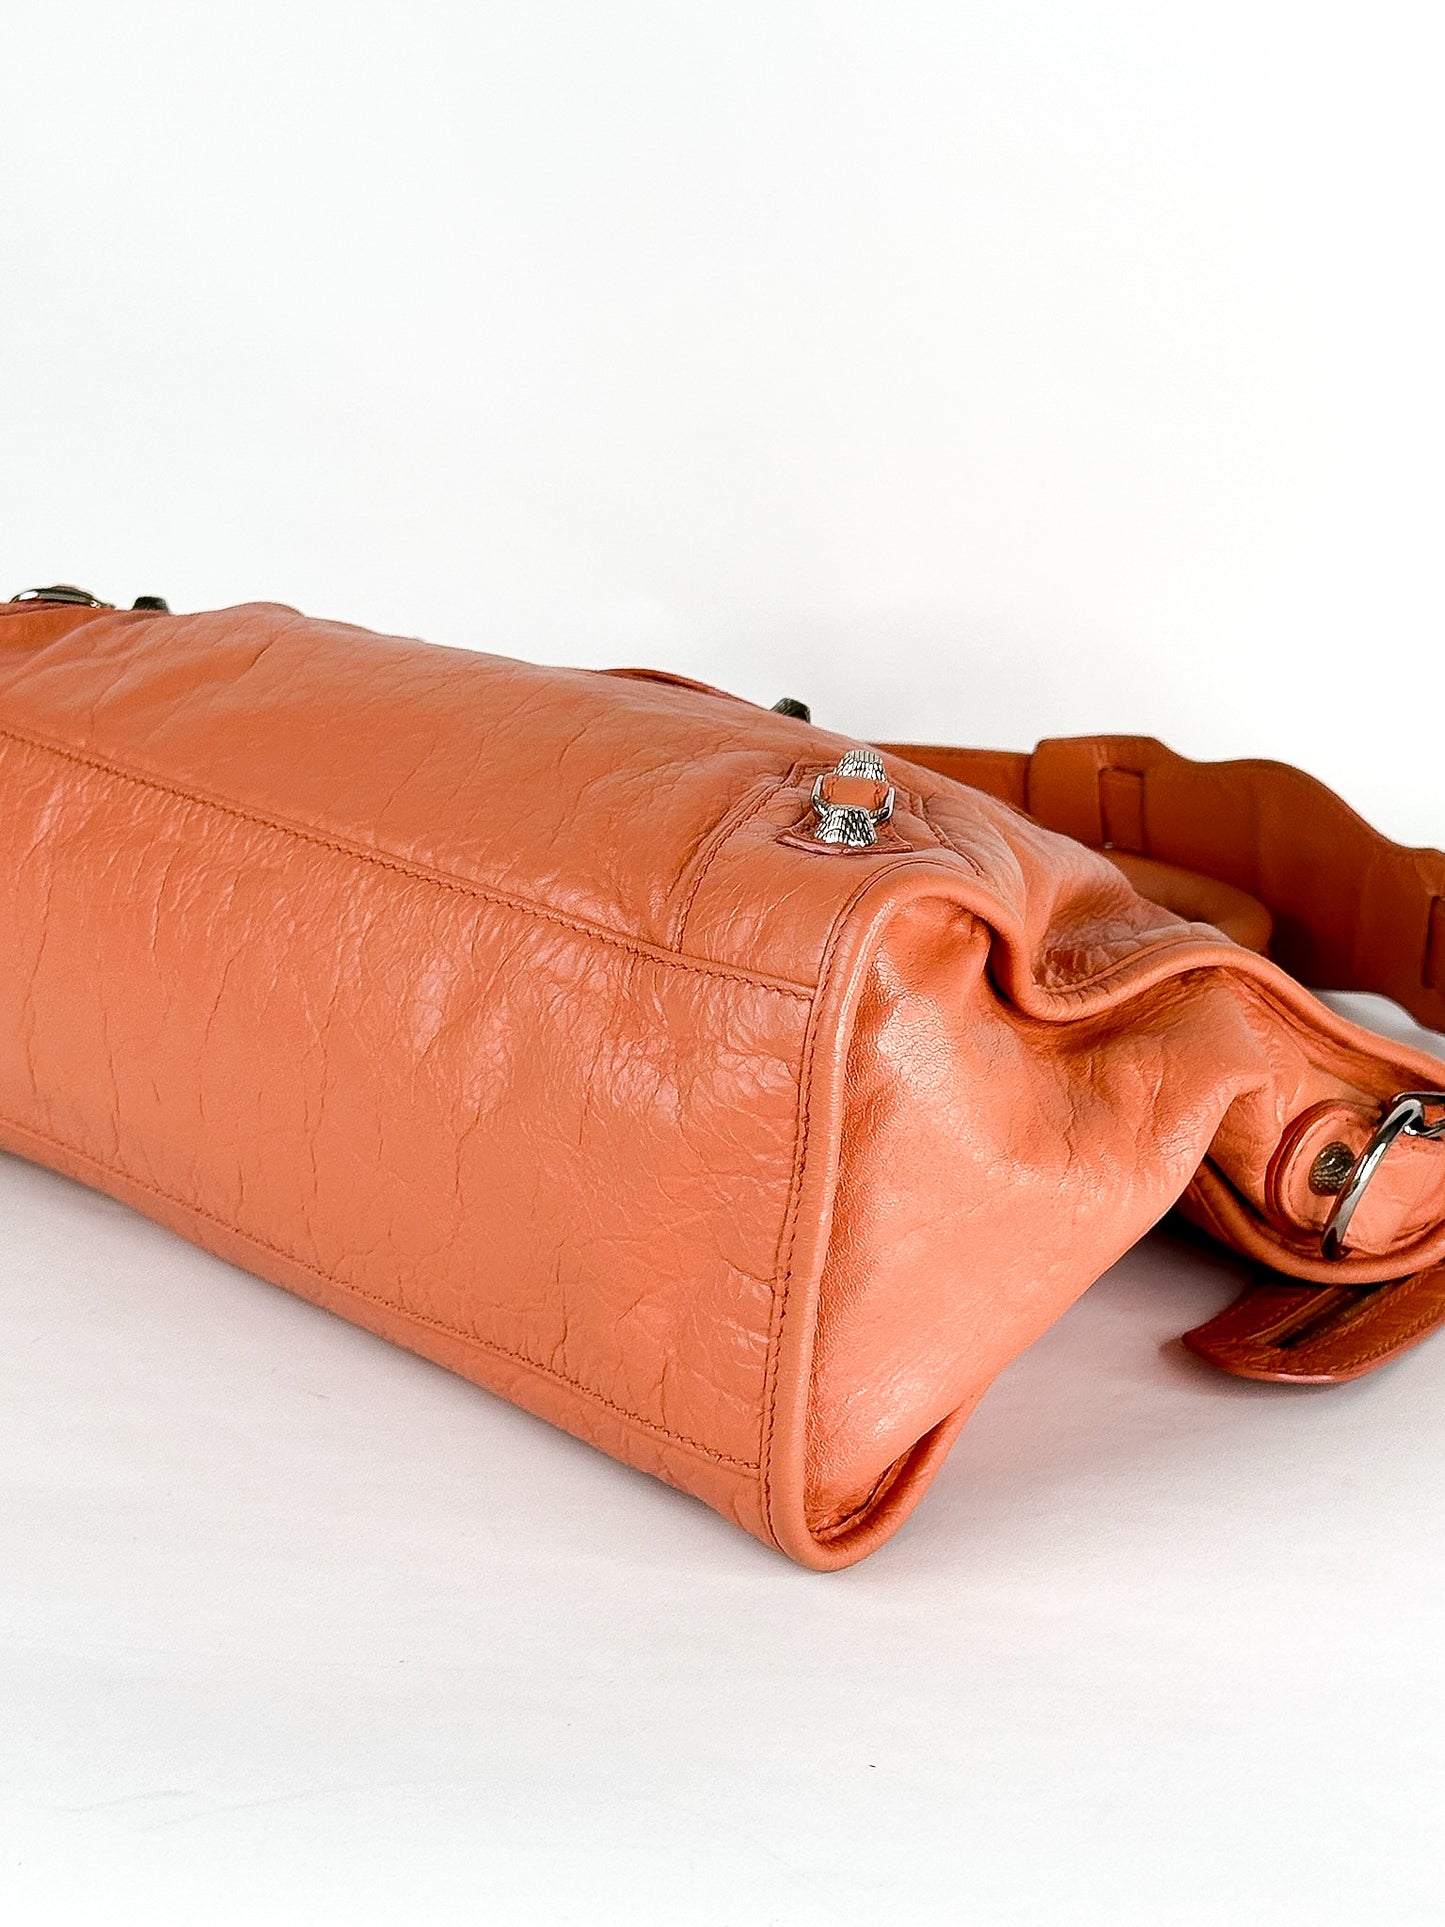 Balenciaga Classic City Bag (Orange)